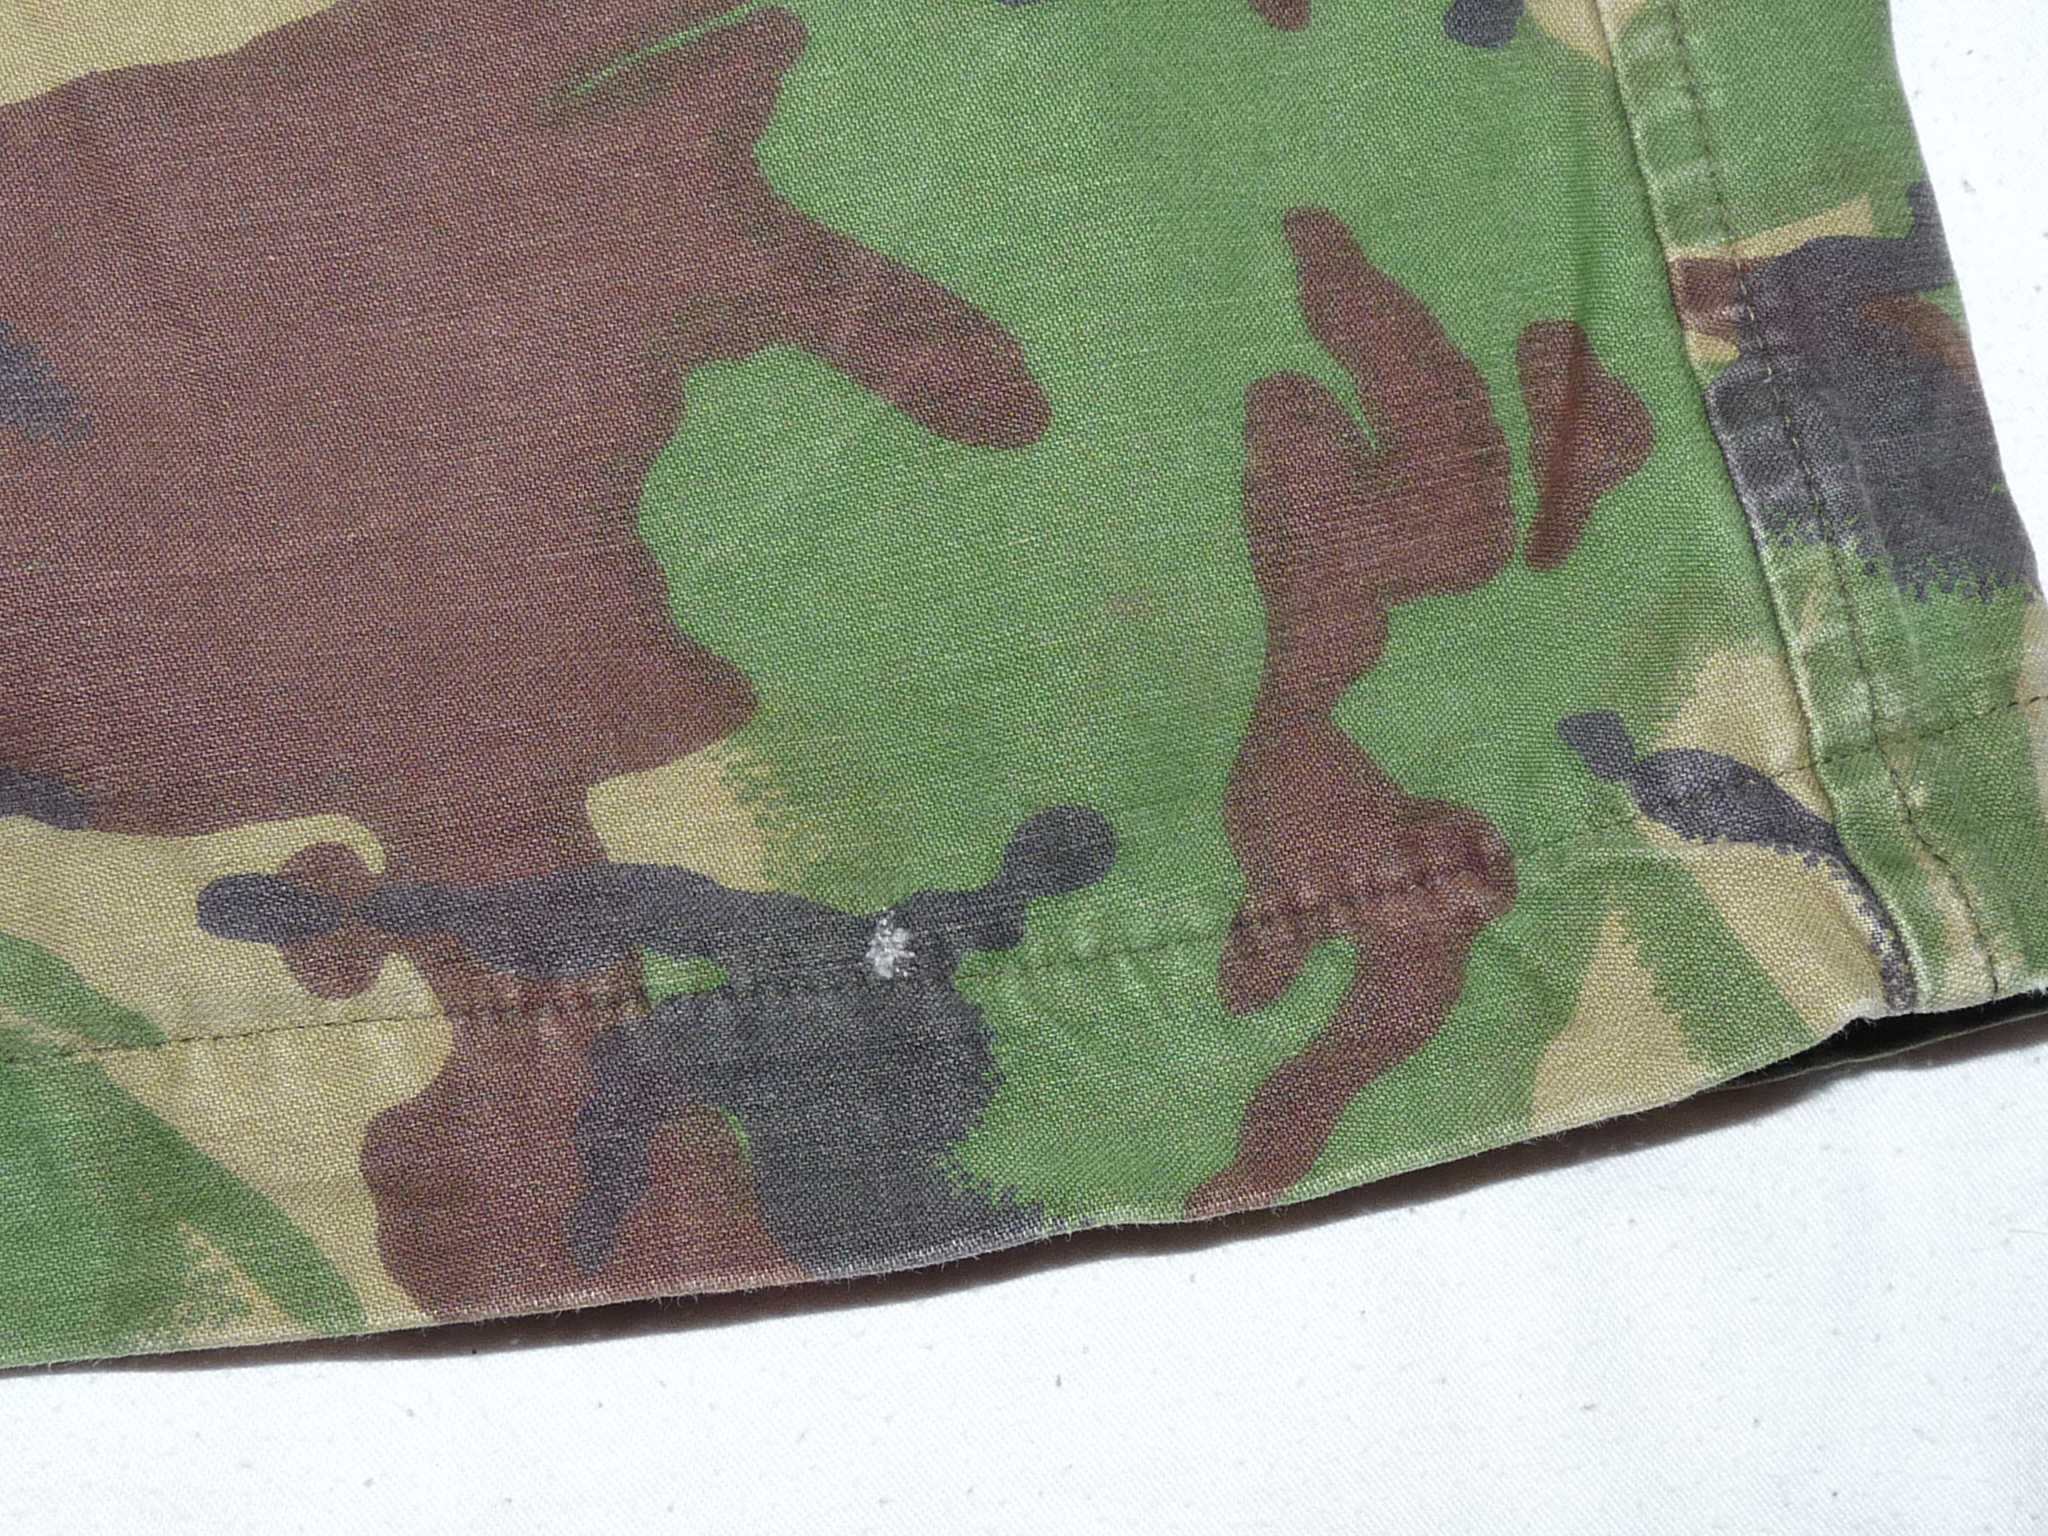 85 Pattern Smock Combat DPM kurtka wojskowa parka brytyjska 180/96 #9